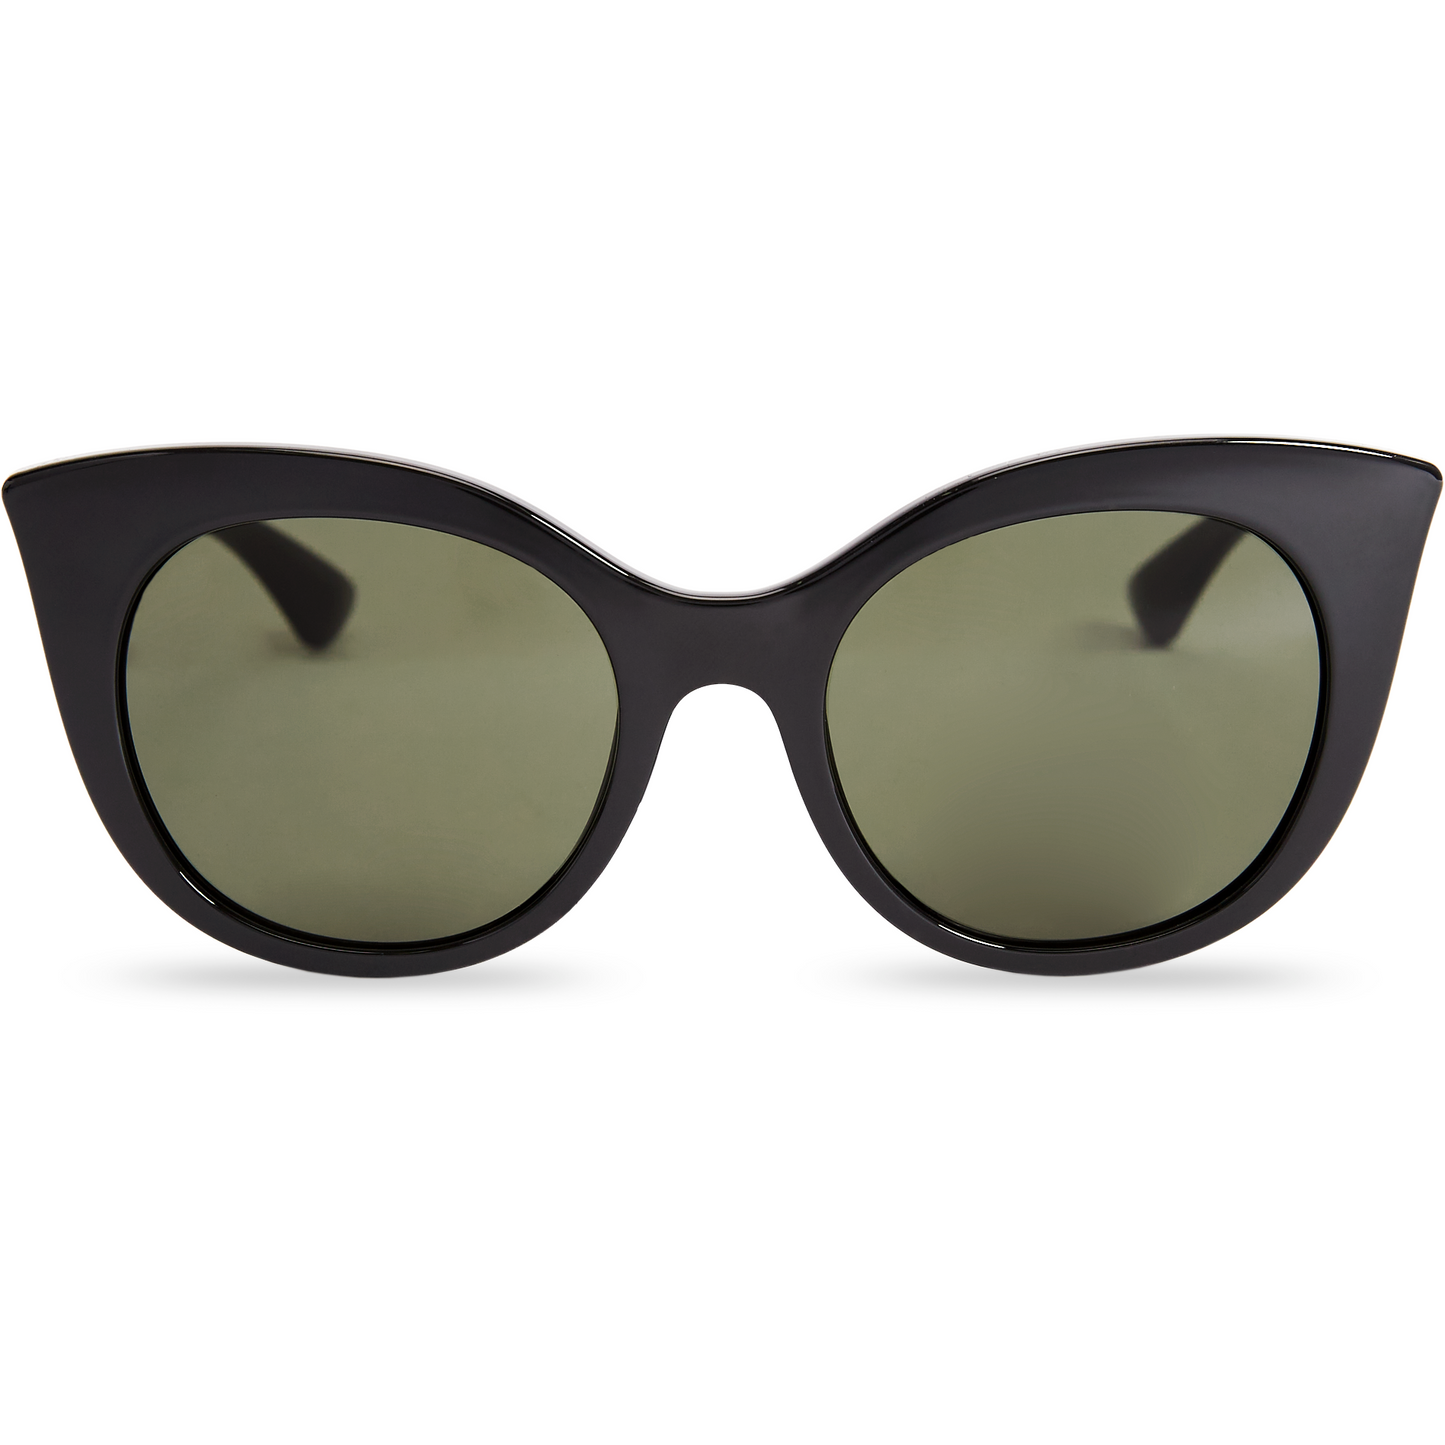 Messyweekend Sunglasses Thelma, Black/Green